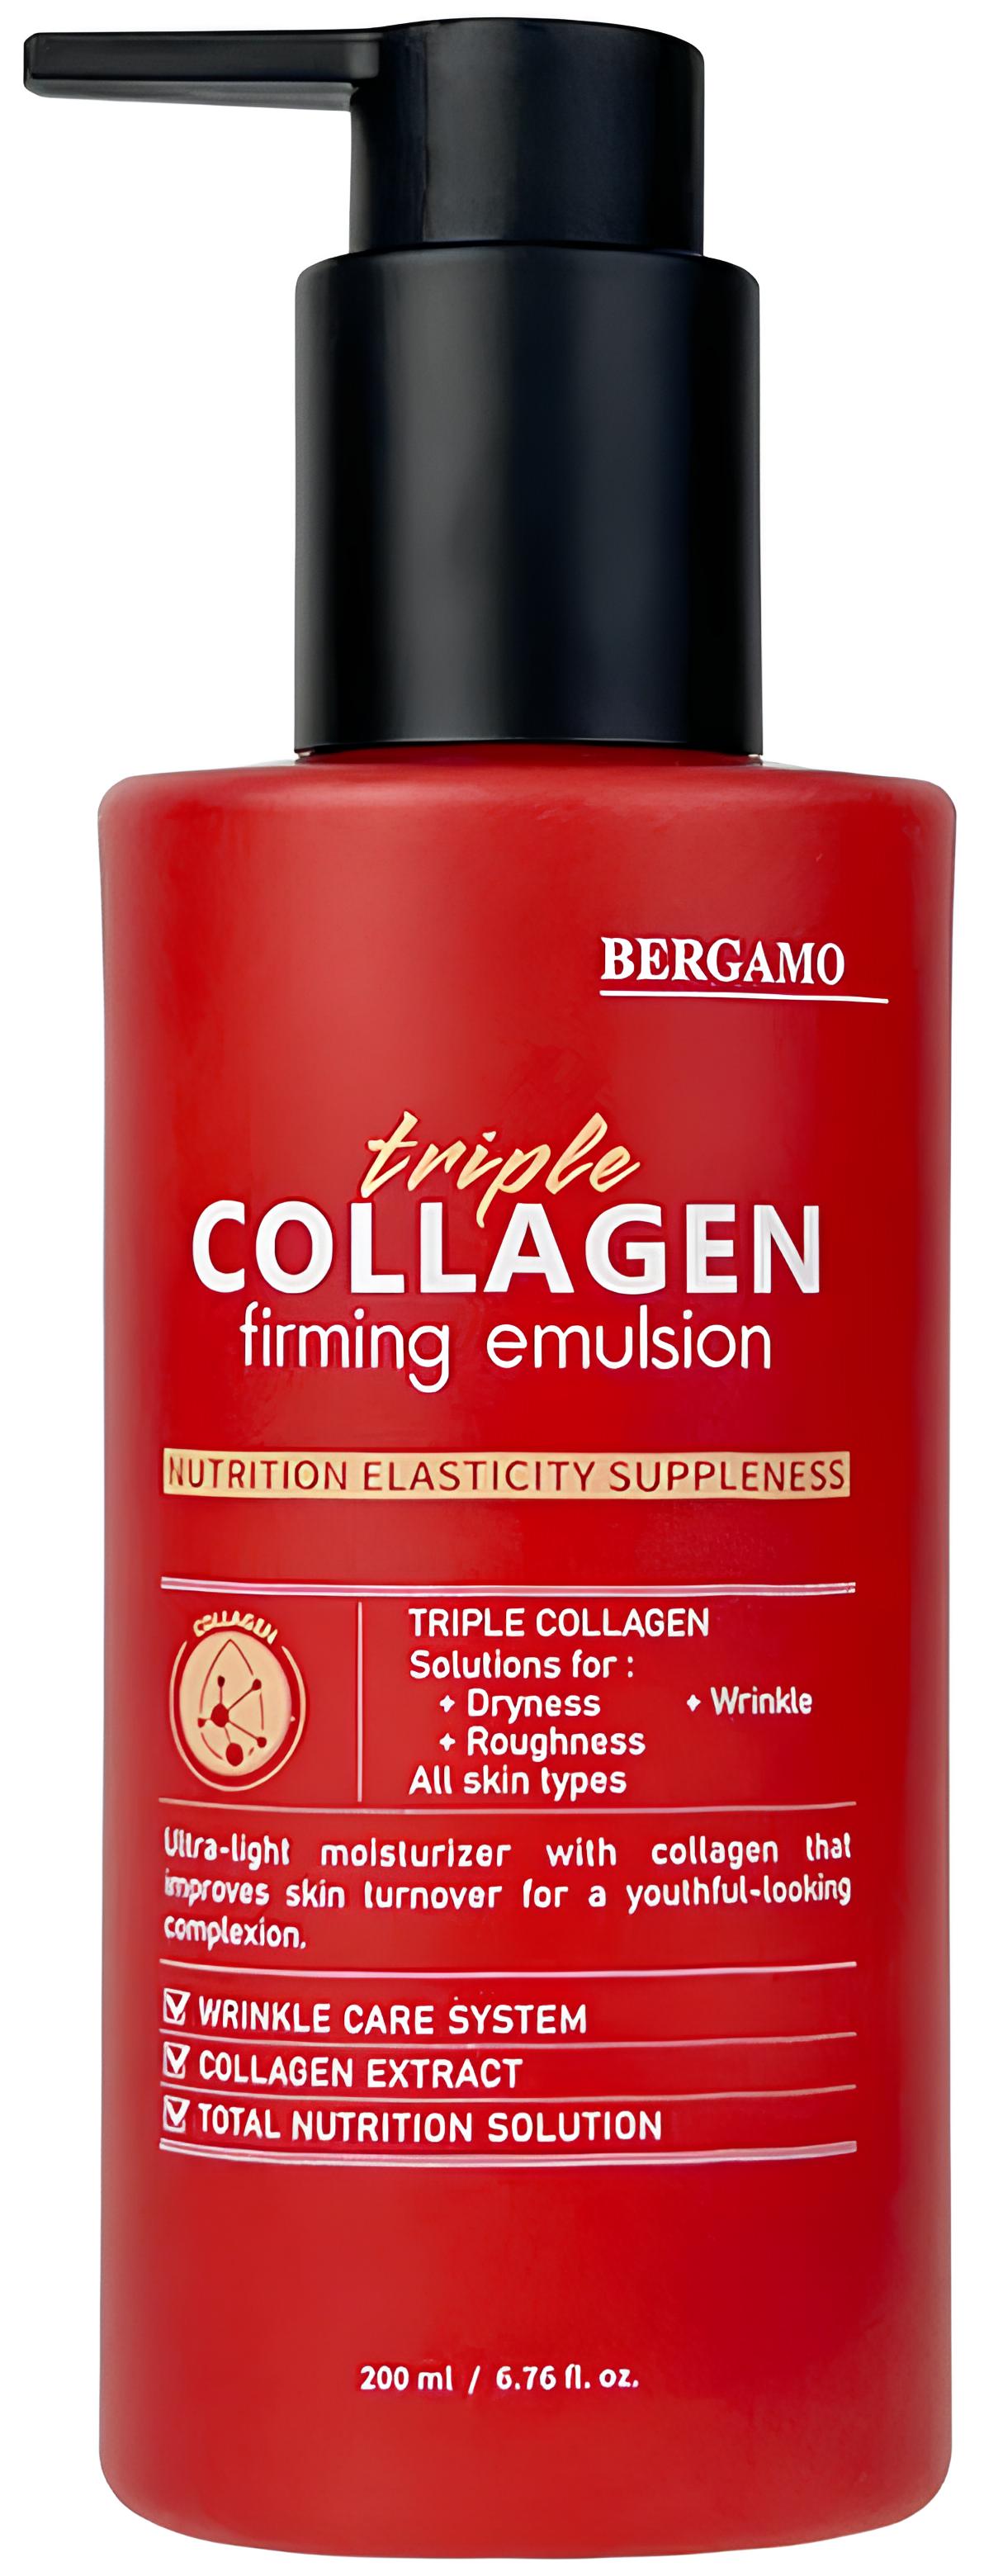 Укрепляющая эмульсия с тройным коллагеном Bergamo Triple Collagen Firming Emulsion 200 мл переноска mp bergamo iata 3 bracco eco line travel sprint 3 60x40x38 5 см